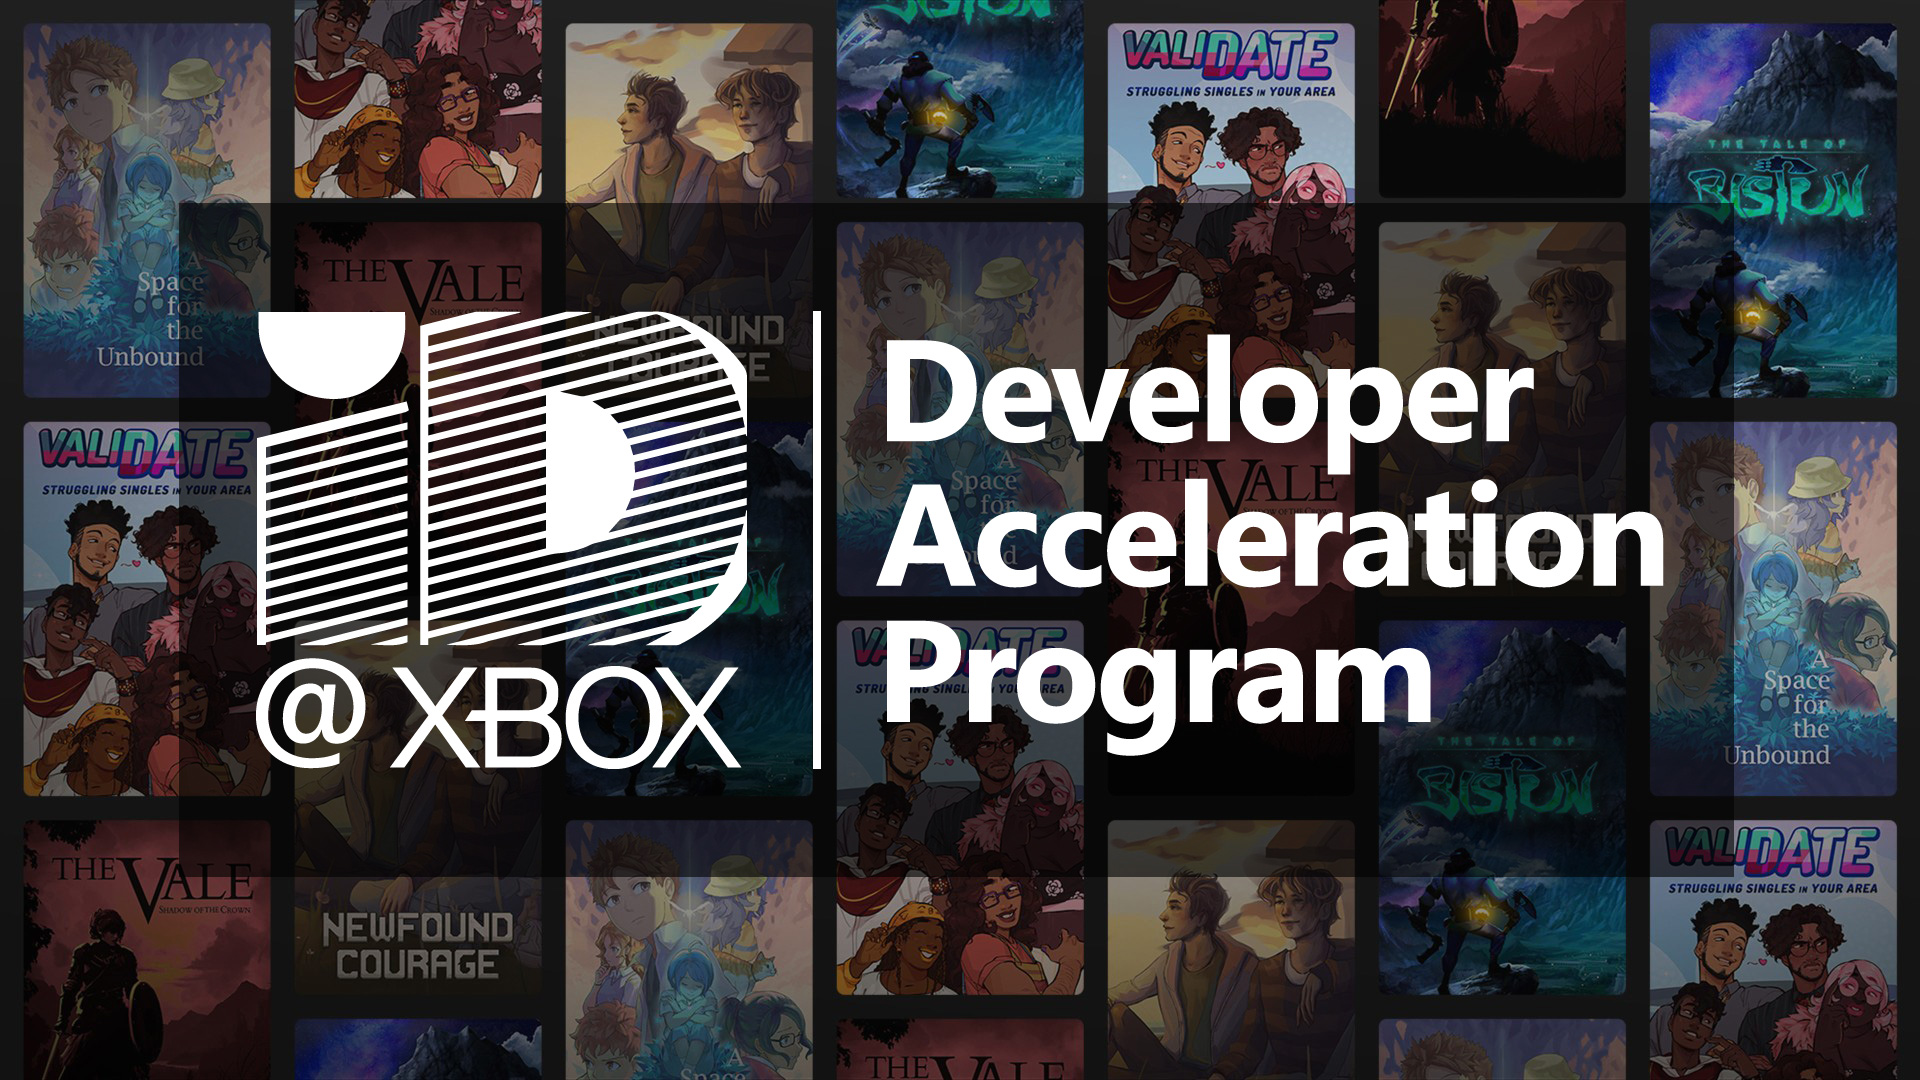 Developer Acceleration Program Collage with logo